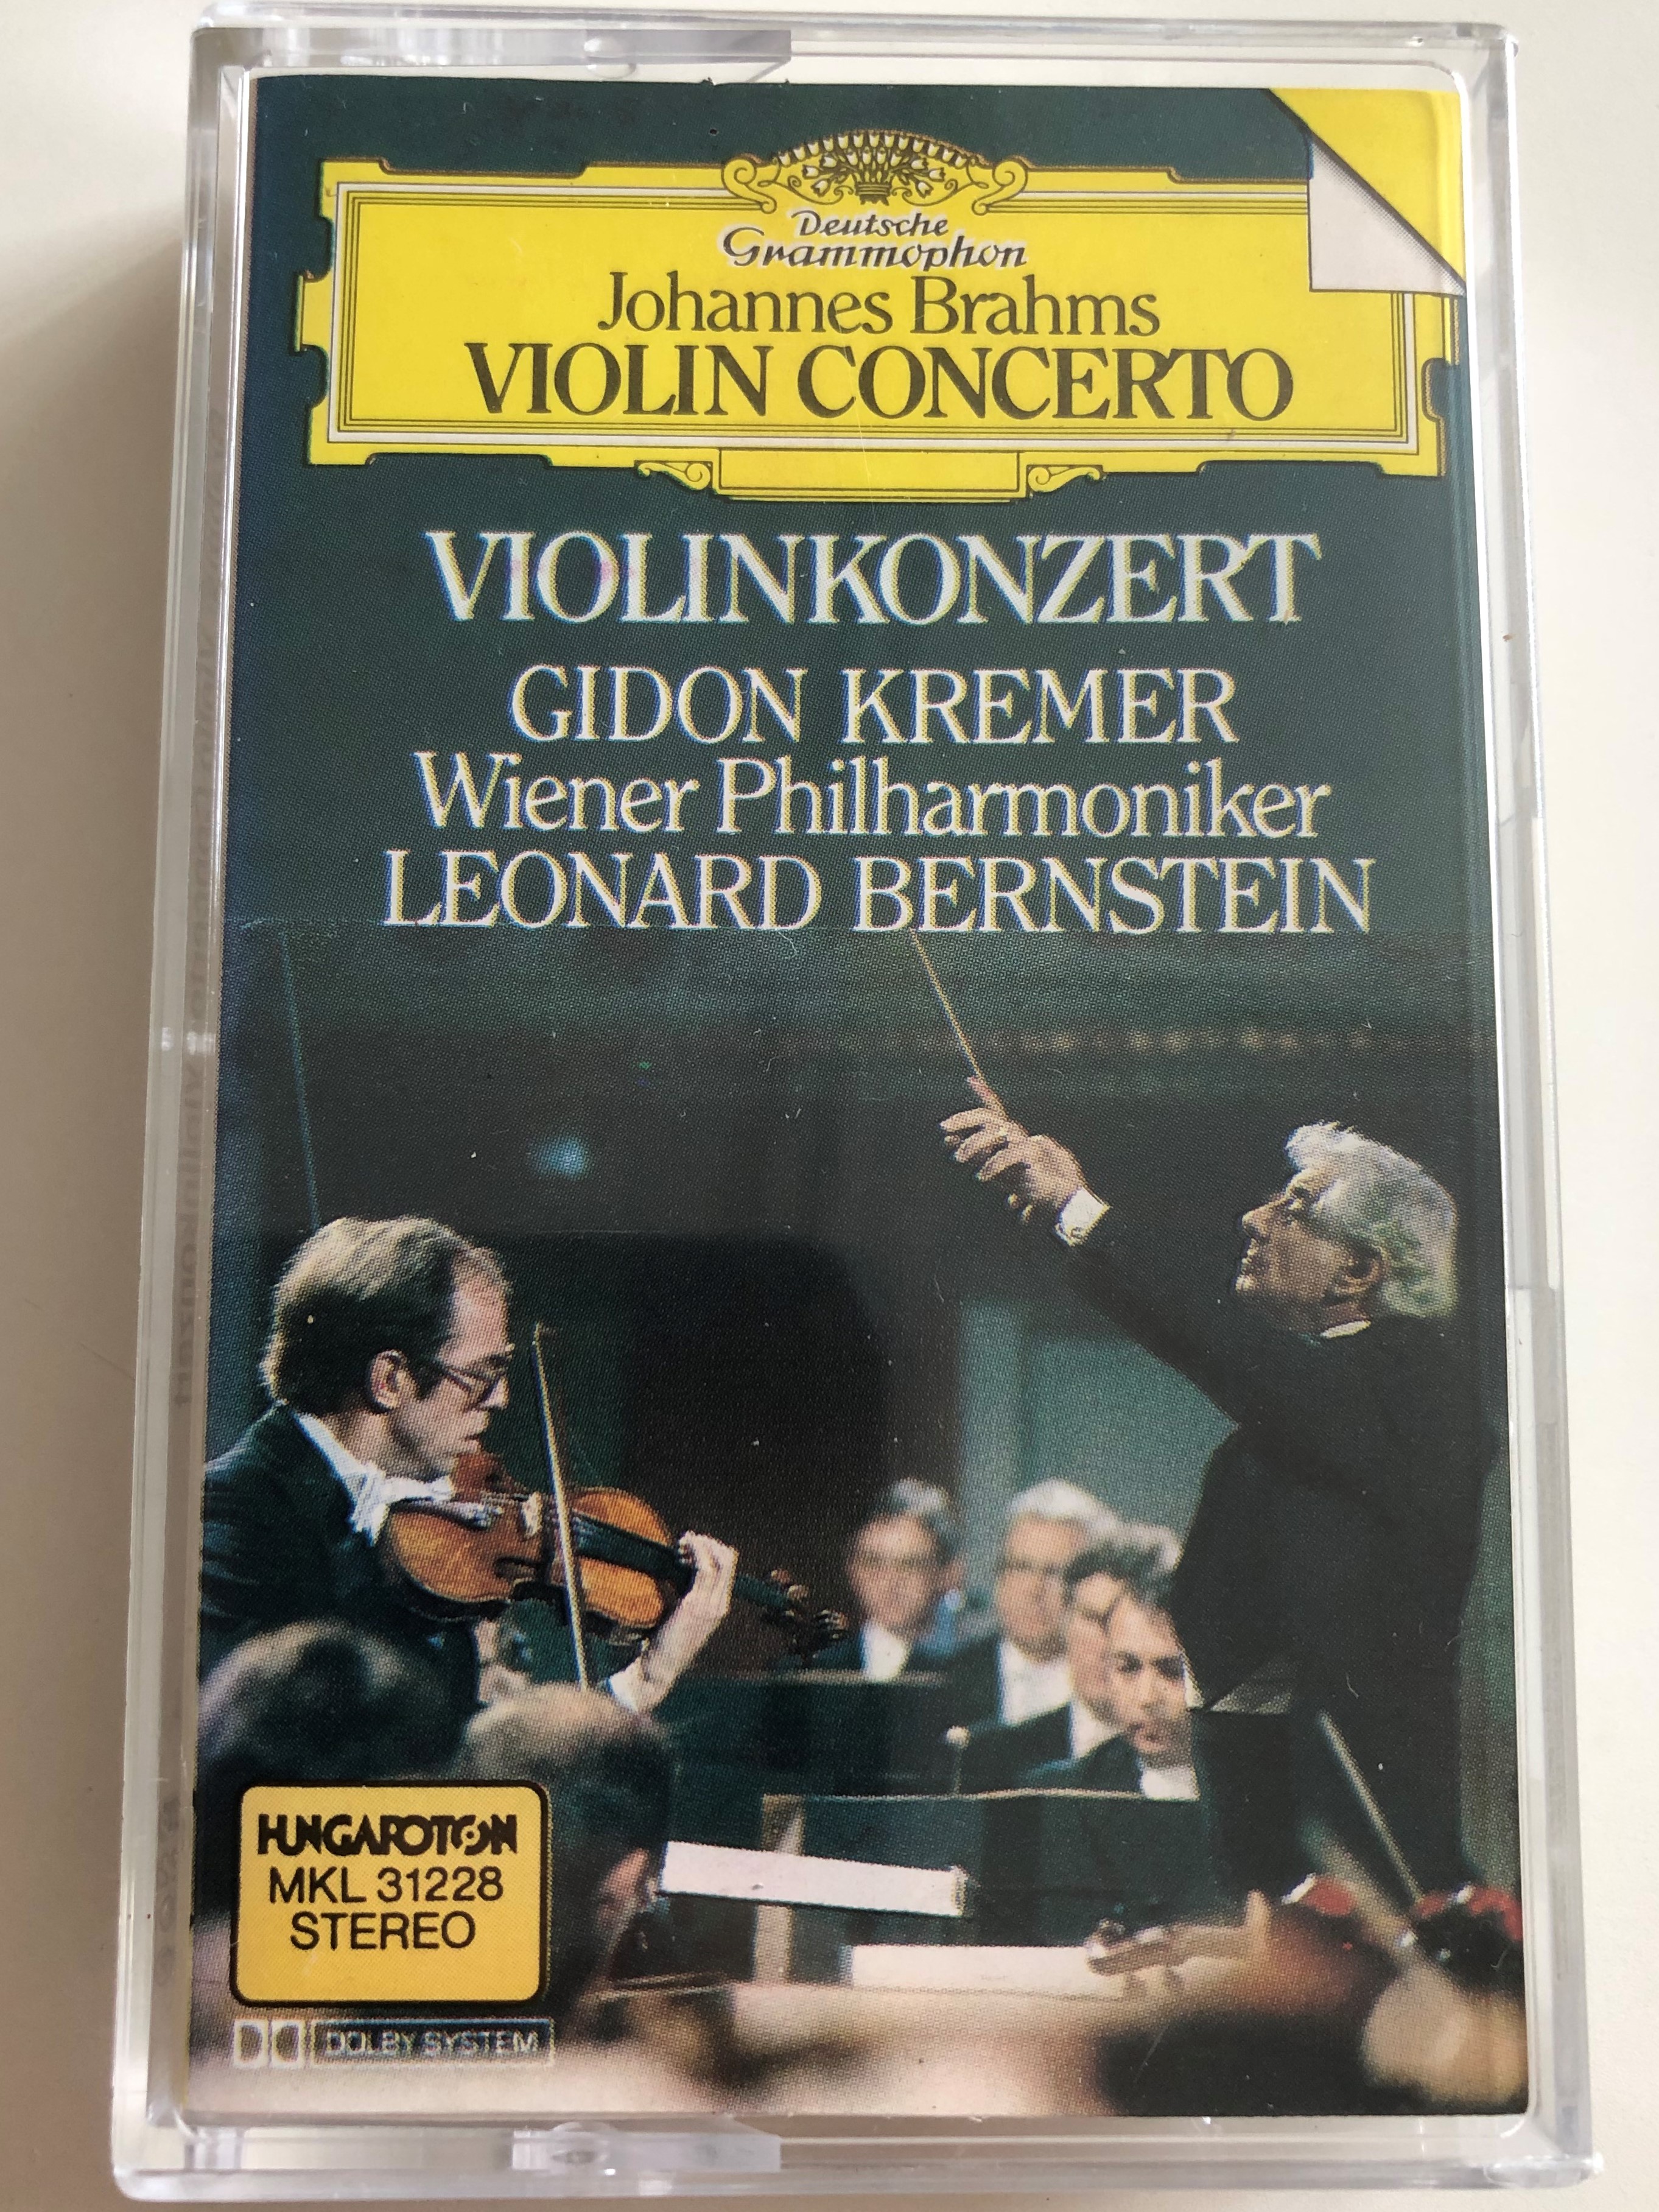 johannes-brahms-violin-concerto-violinkonzert-gidon-kremer-wiener-philharmoniker-leonard-bernstein-hungaroton-cassette-stereo-mkl-31228-1-.jpg